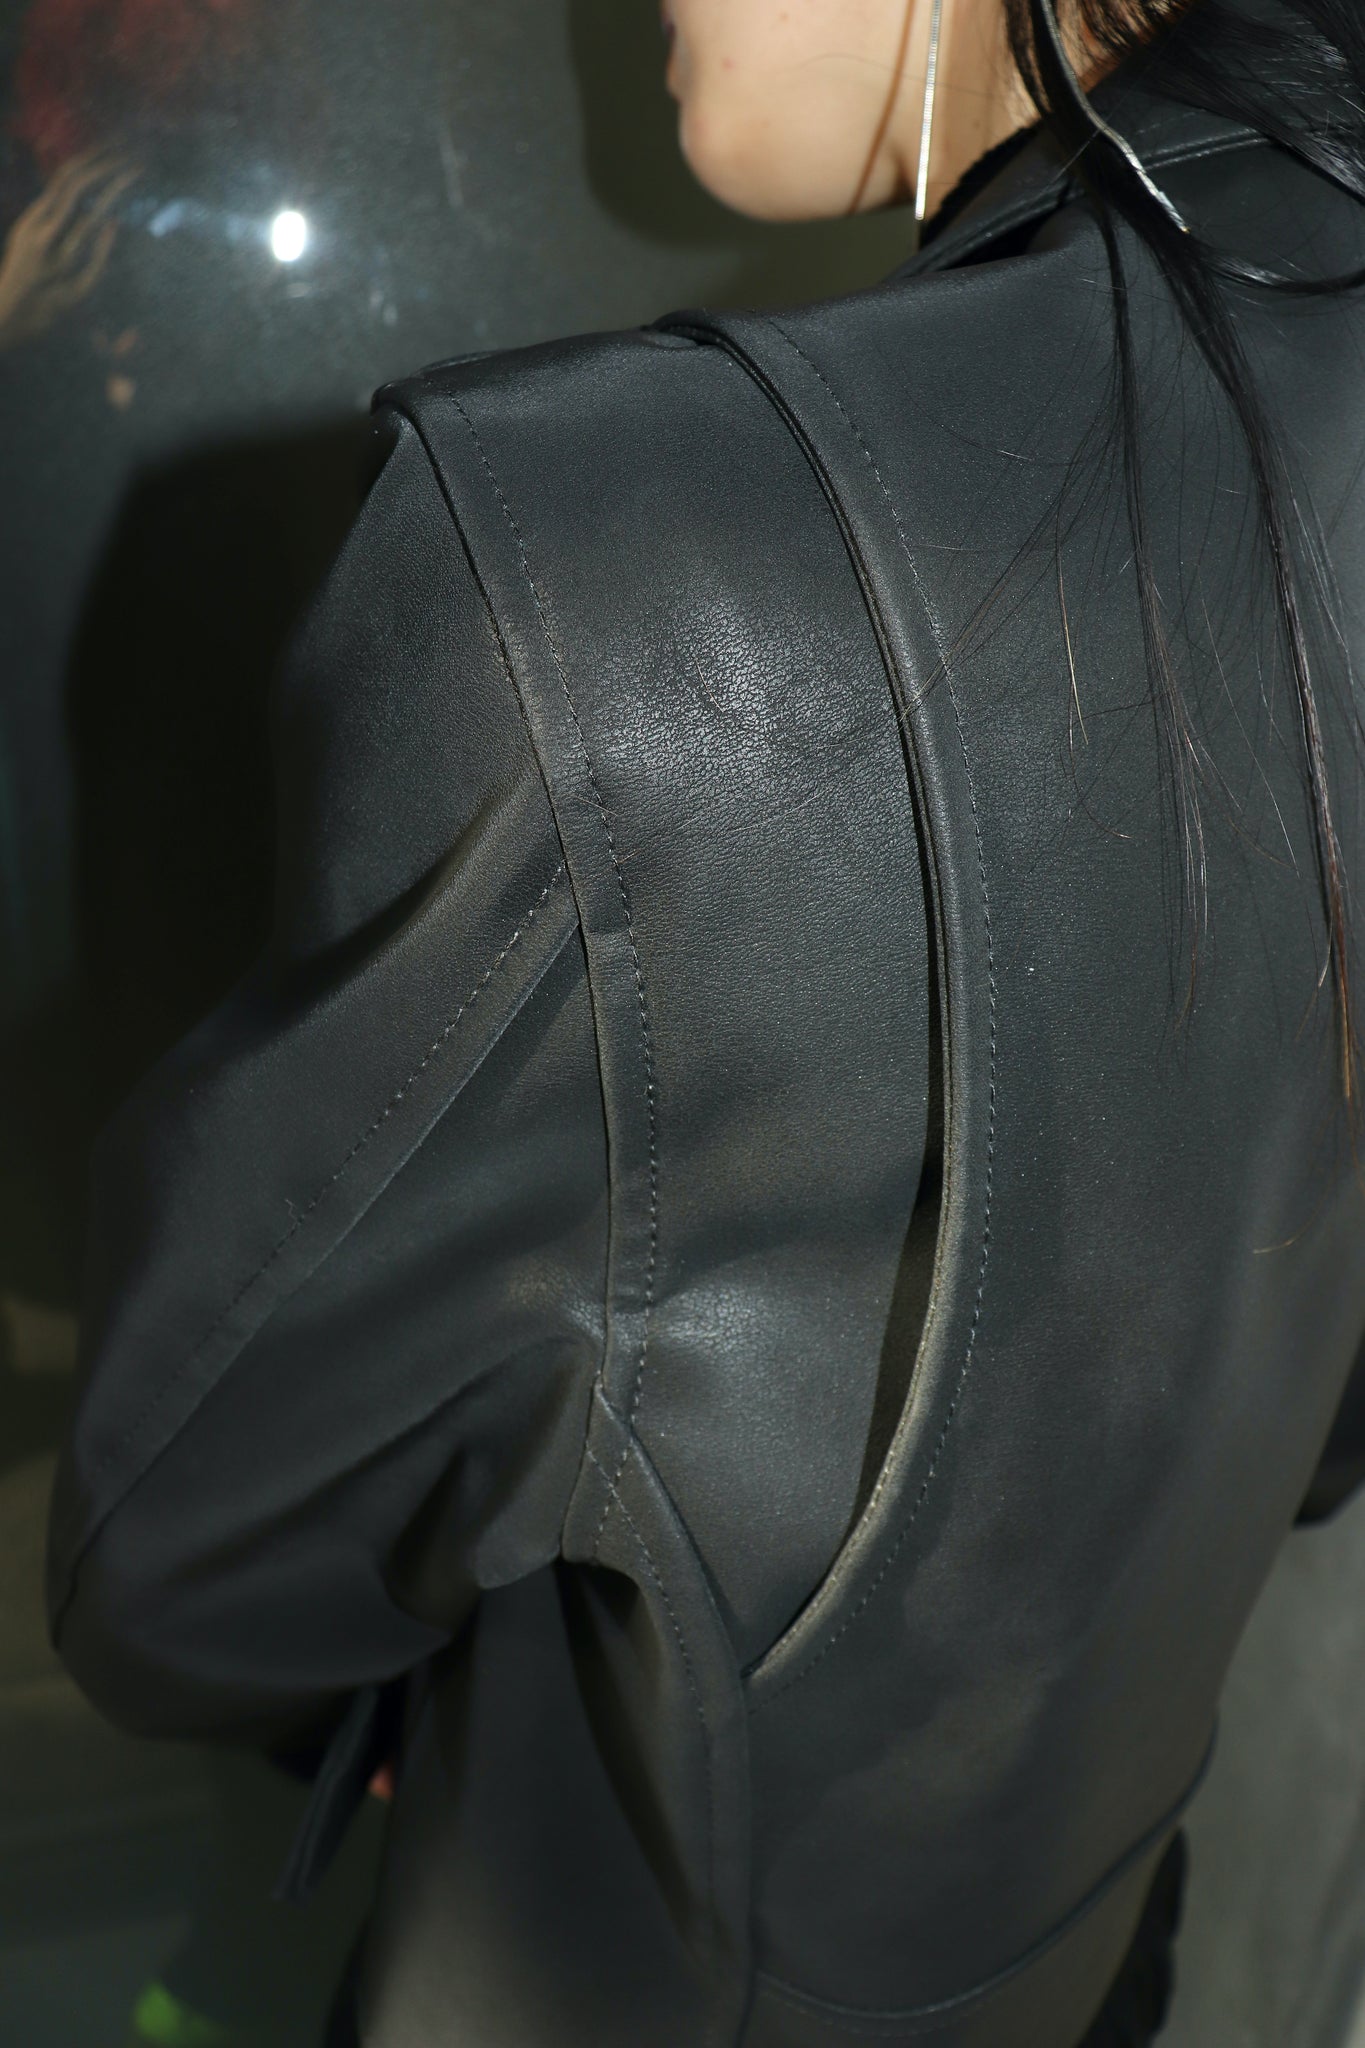 perverze 22AW Re-Leather Riders Jacketを使用したスタイリング画像